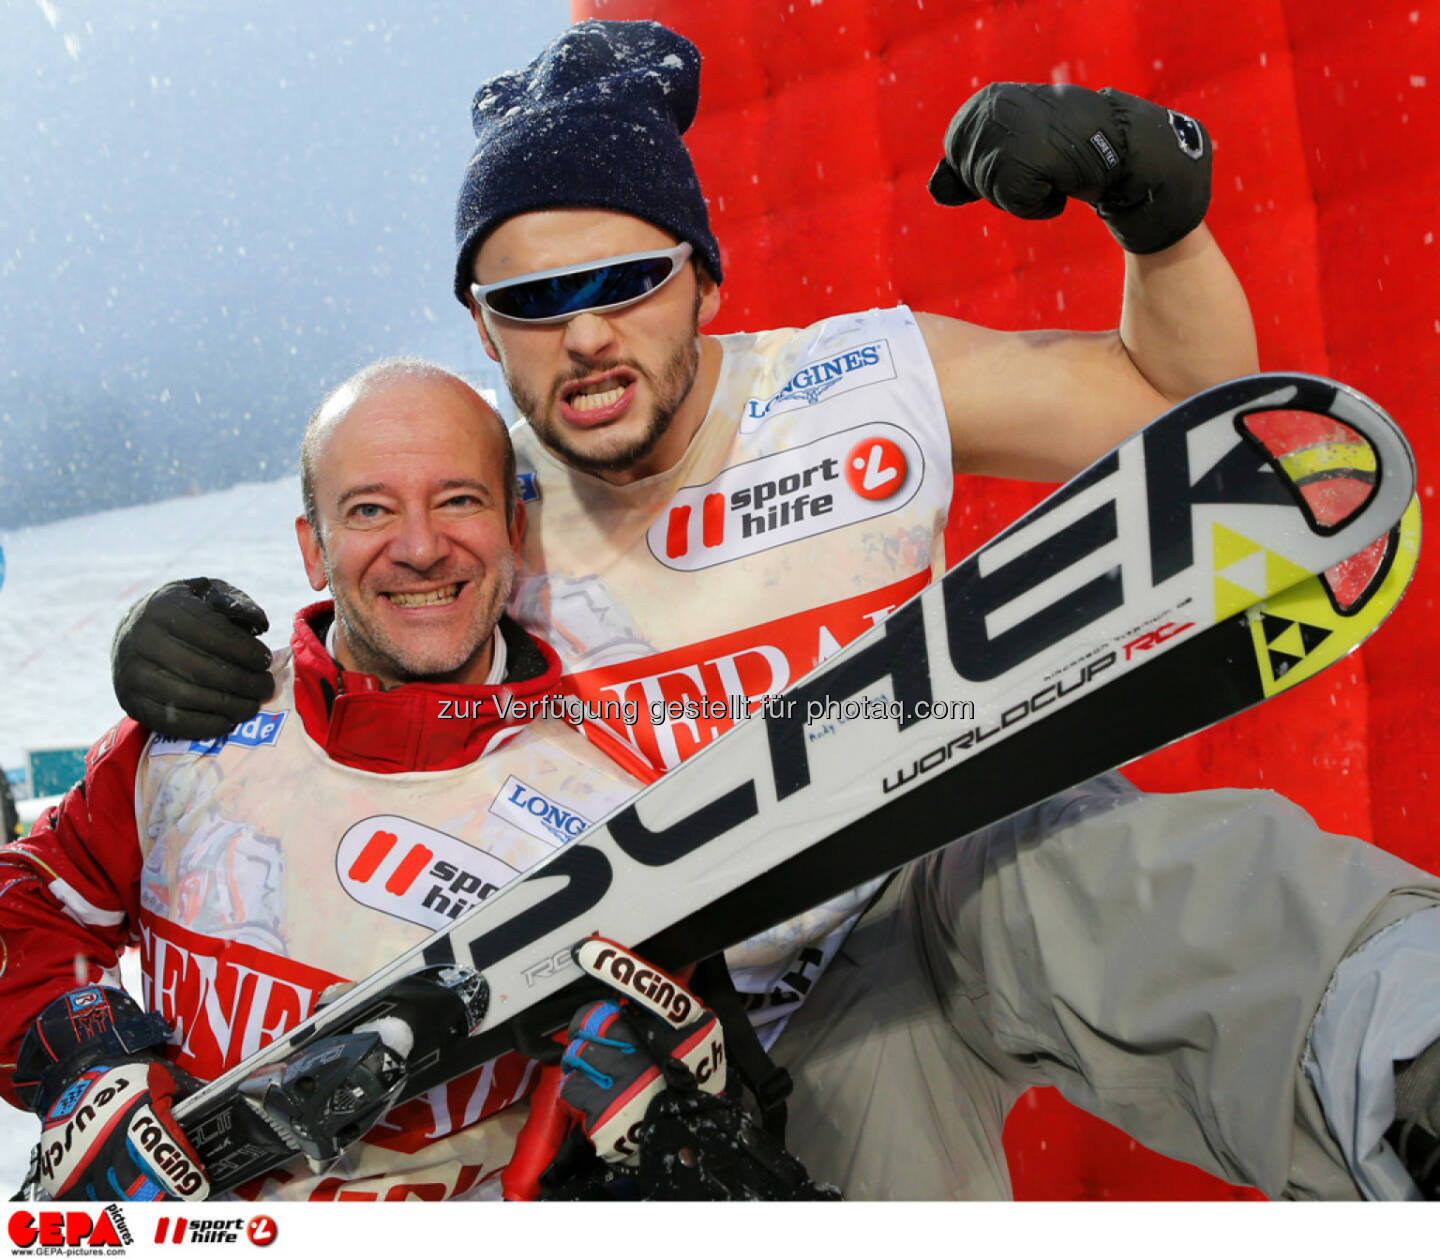 Sporthilfe Charity Race. Bild zeigt Andy Lee Lang und Lukas Ploechl (Trackshittaz).
Foto: GEPA pictures/ Wolfgang Grebien